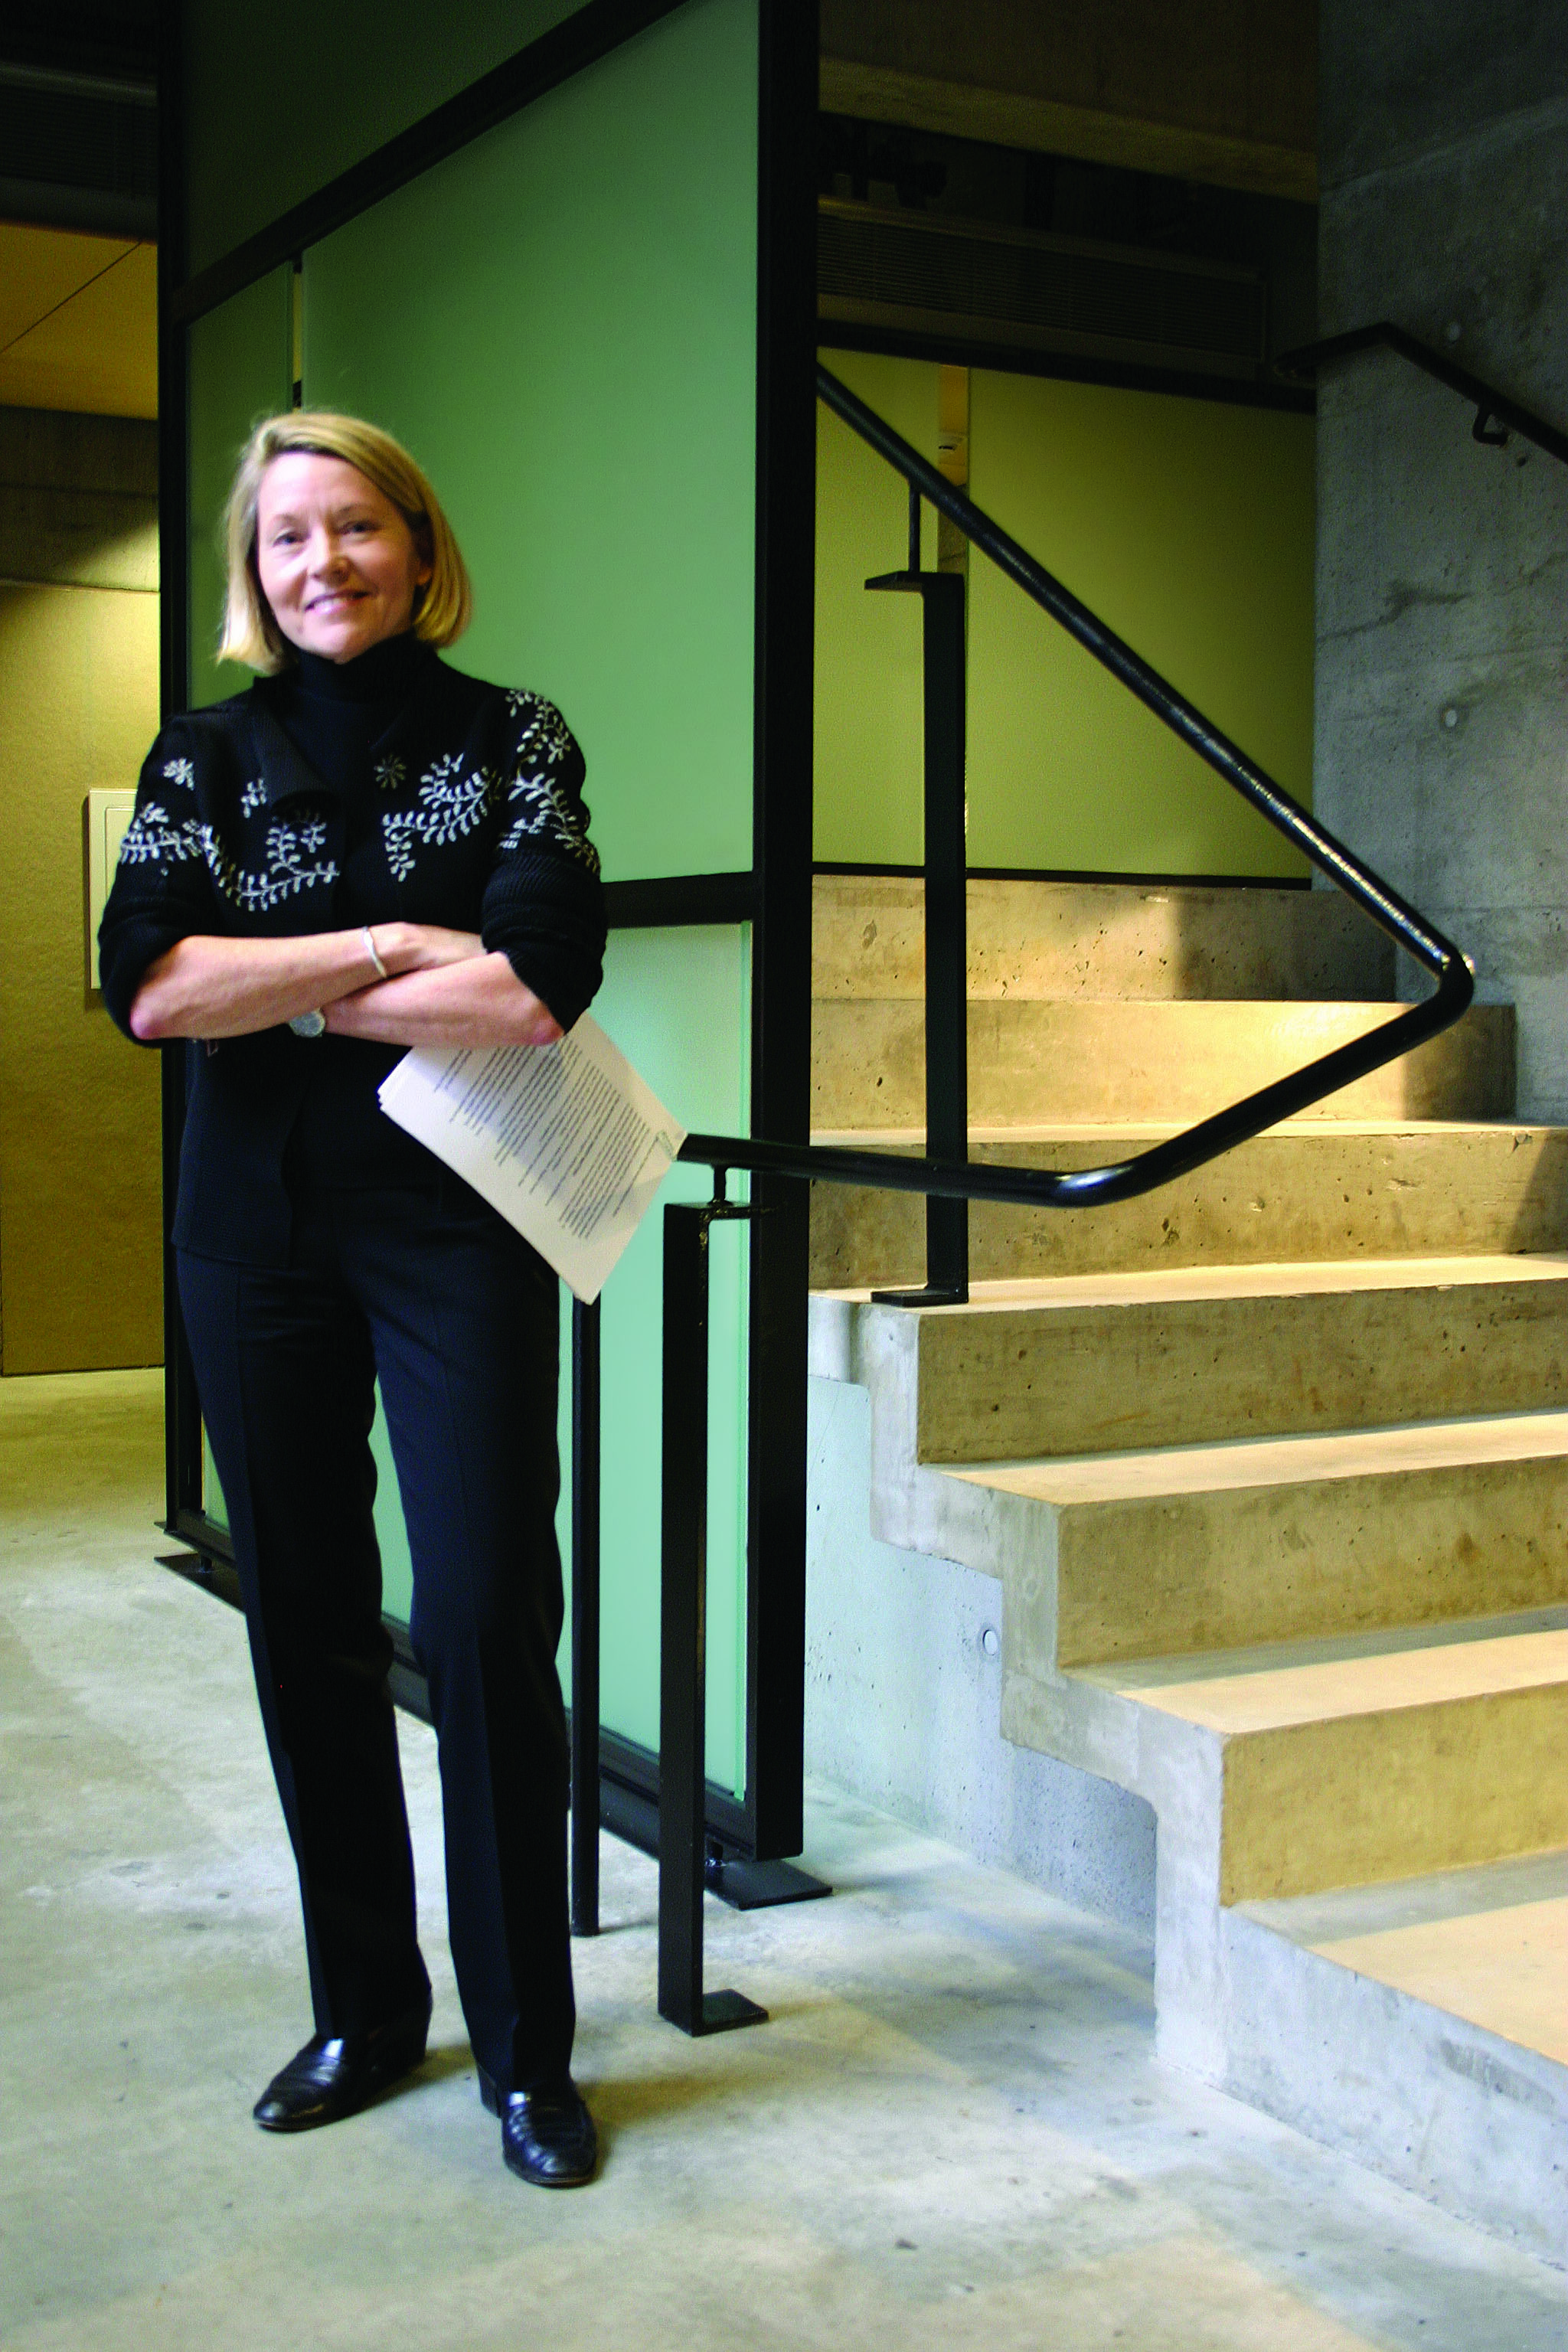 Karen Van Lengen stands next to a staircase